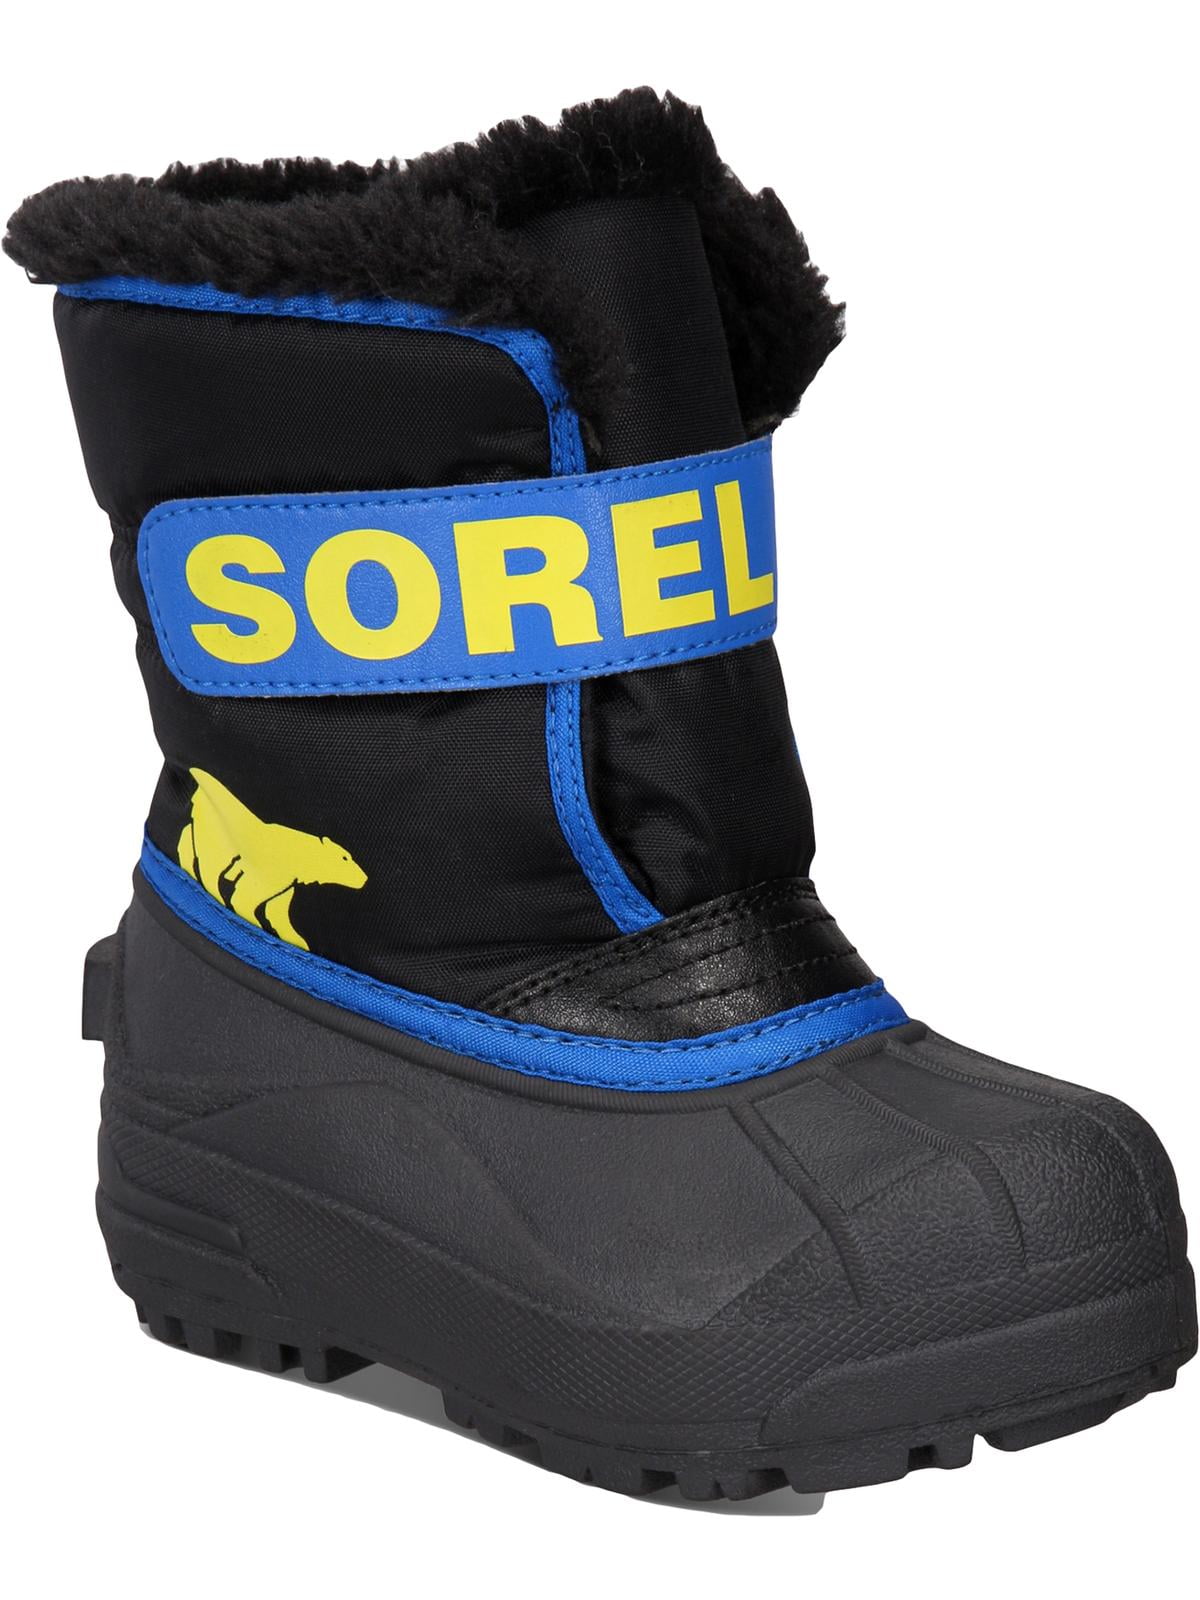 Sorel Unisex Babies Toddler Snow Commander Boots